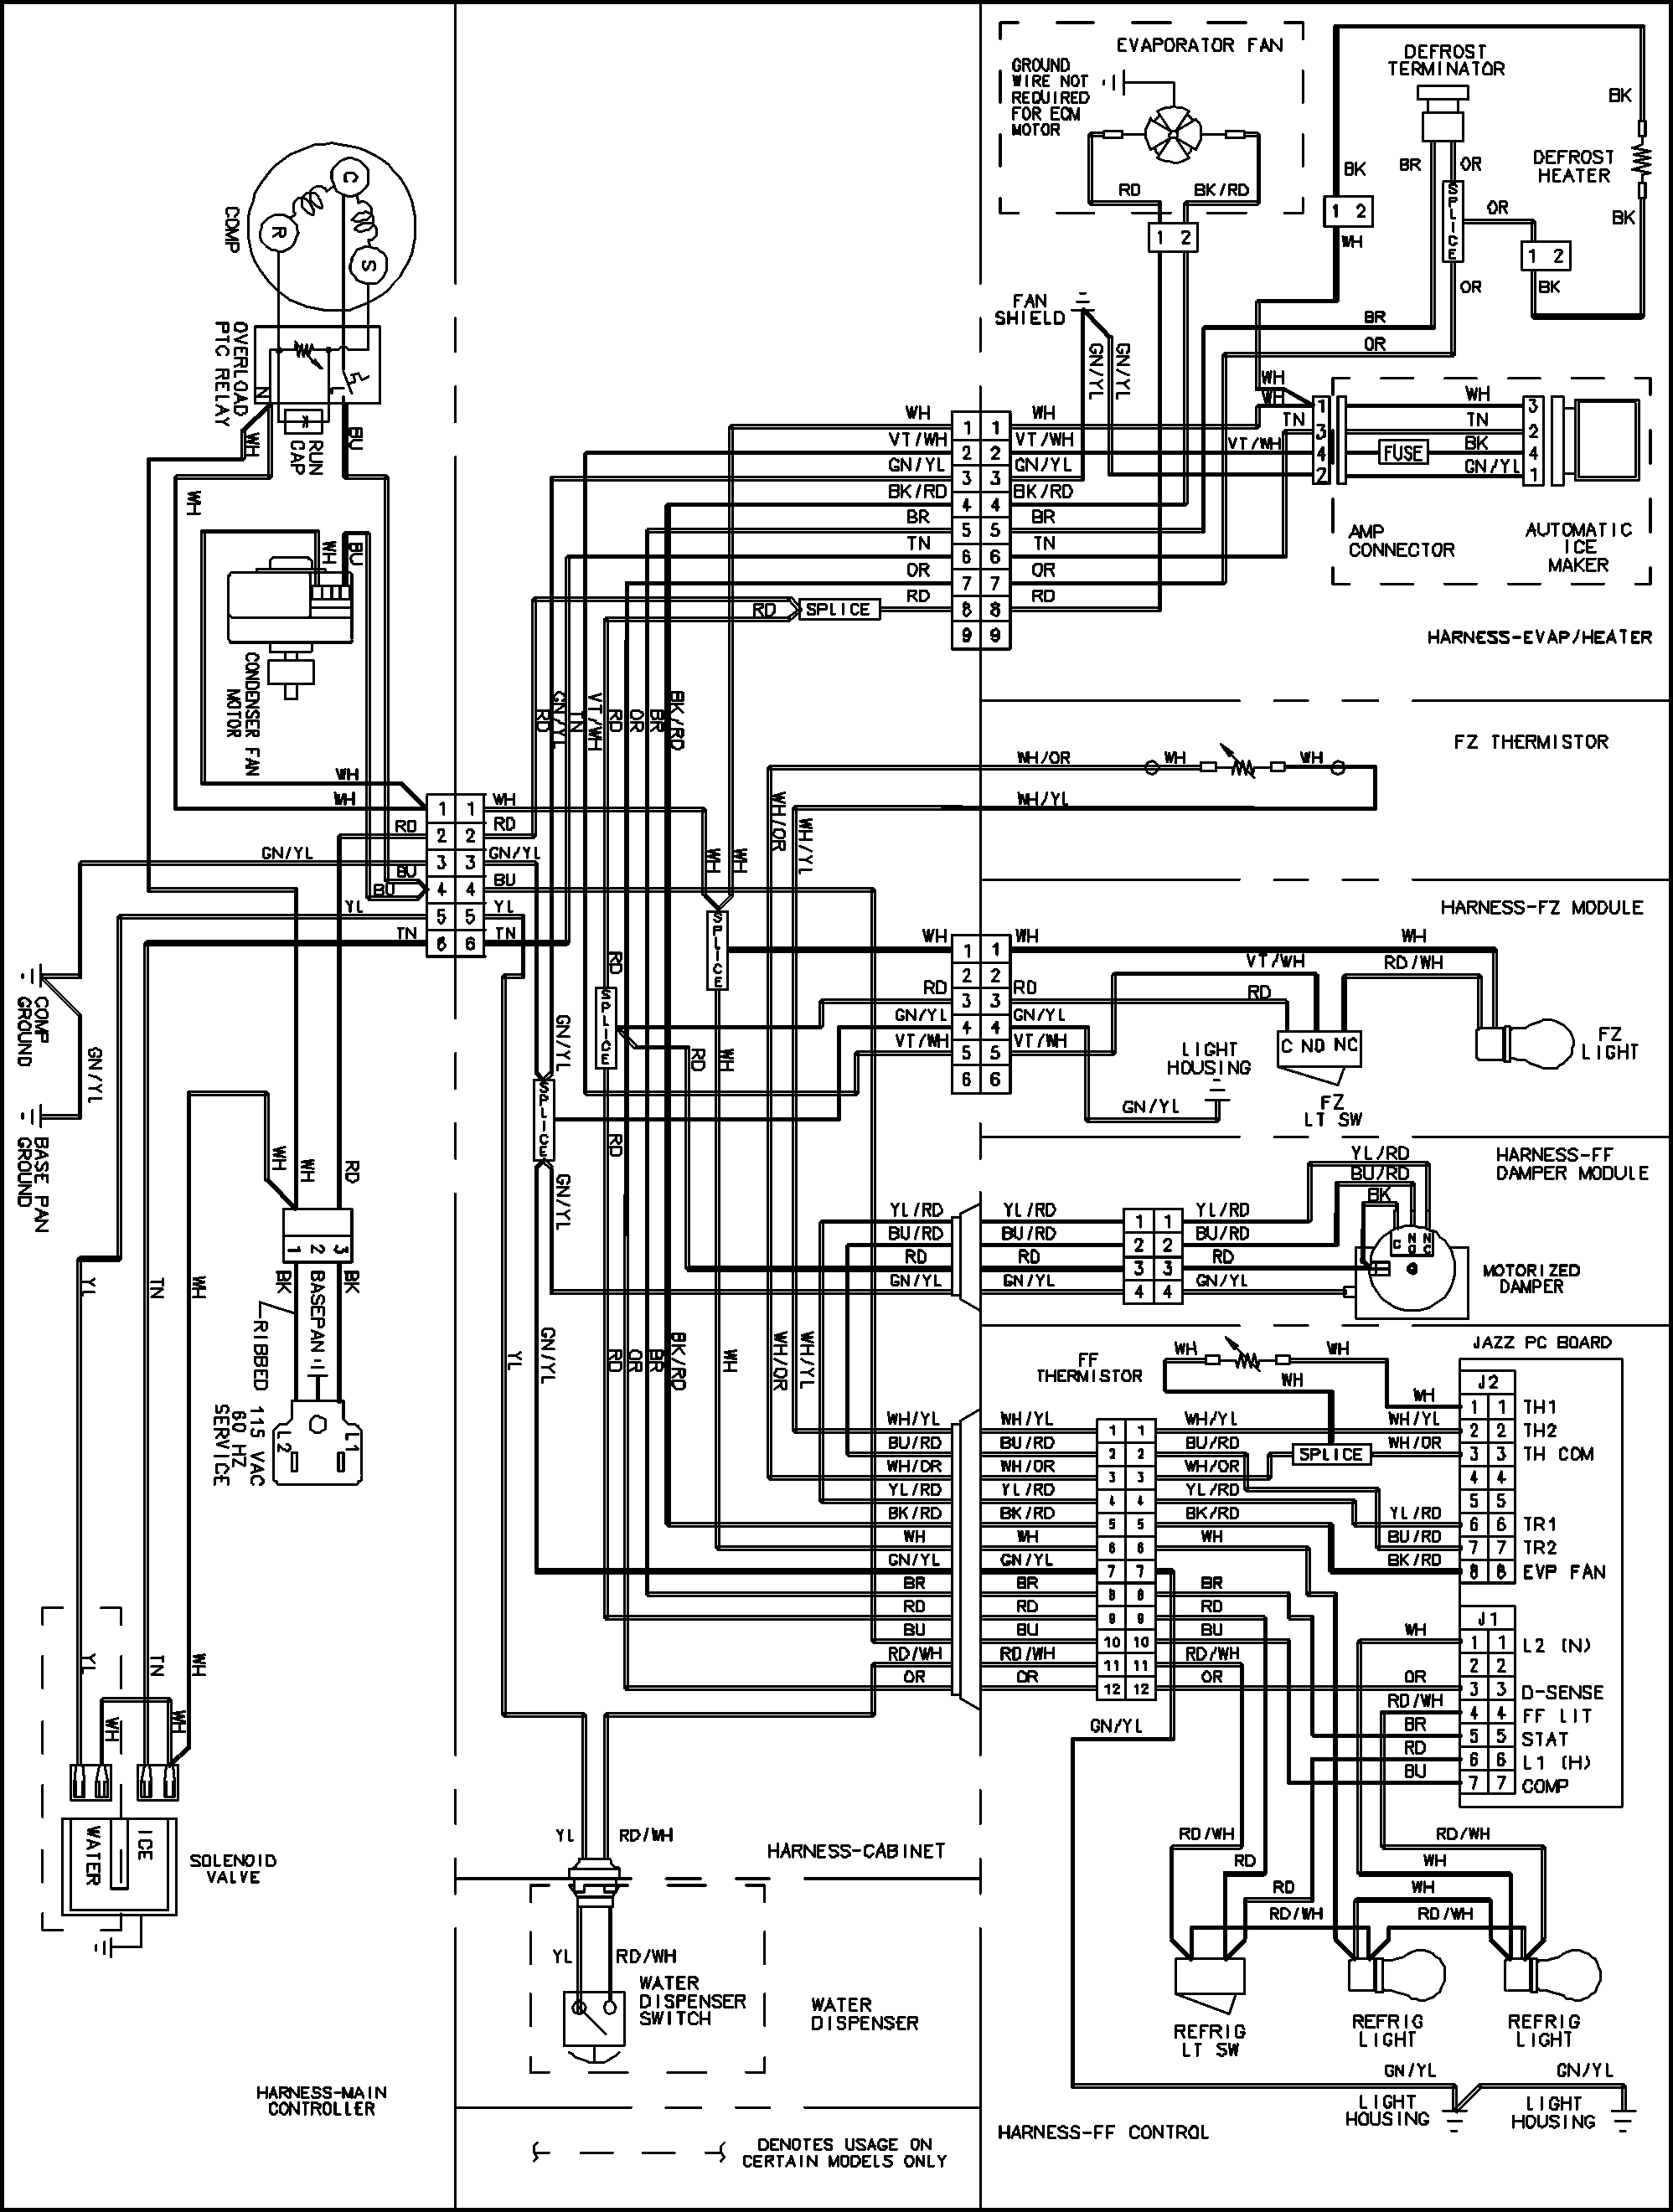 35 True Freezer T 49f Wiring Diagram - Wiring Diagram Database